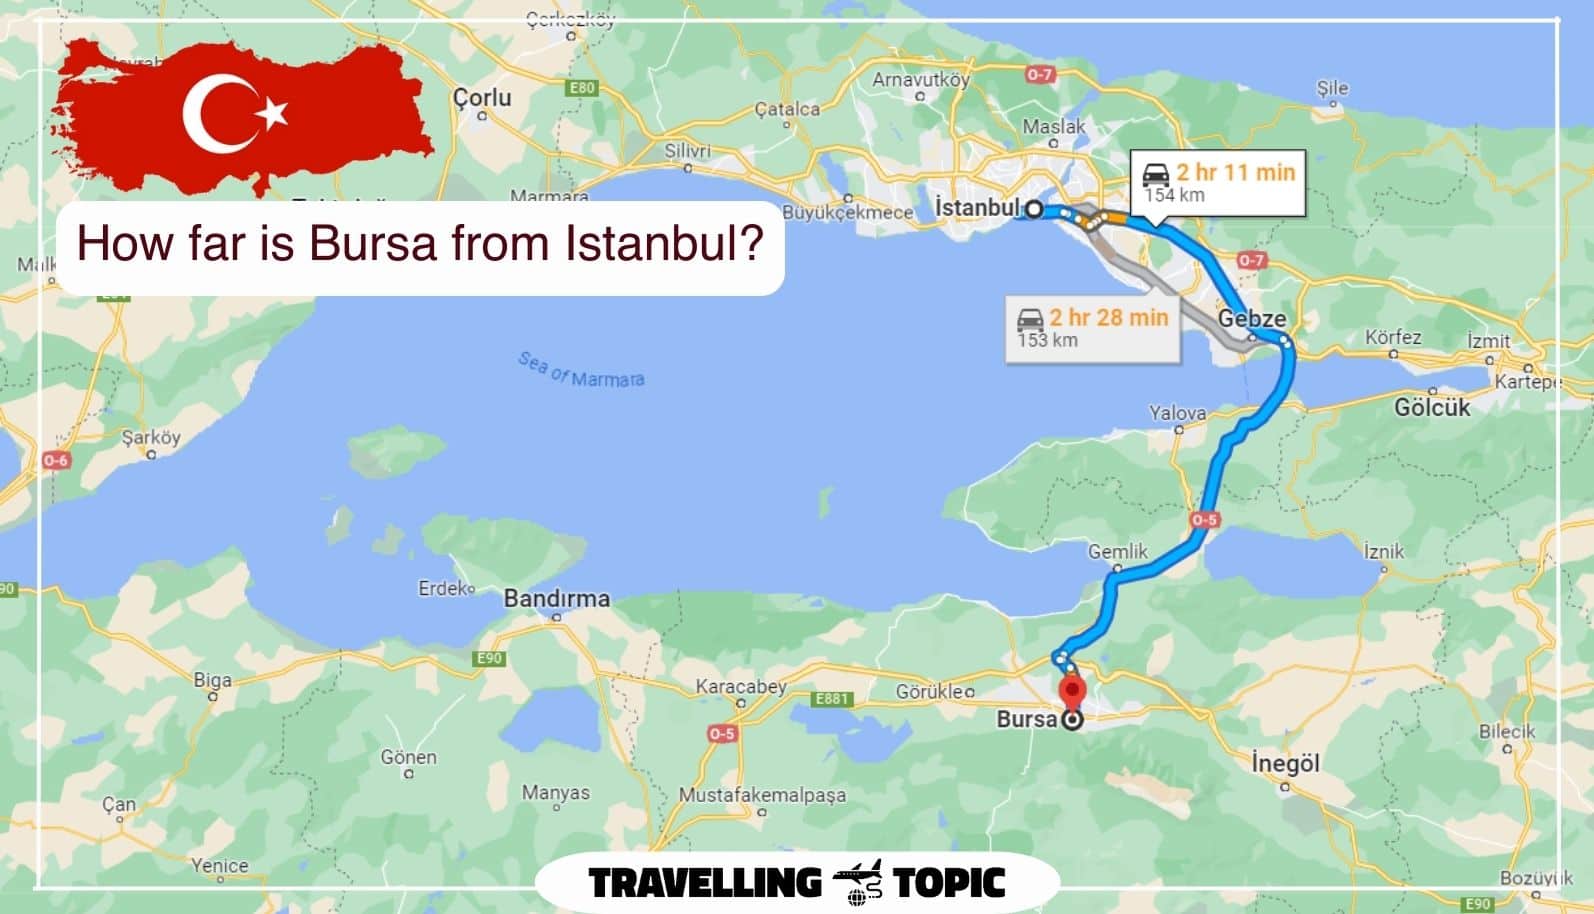 How far is Bursa from Istanbul